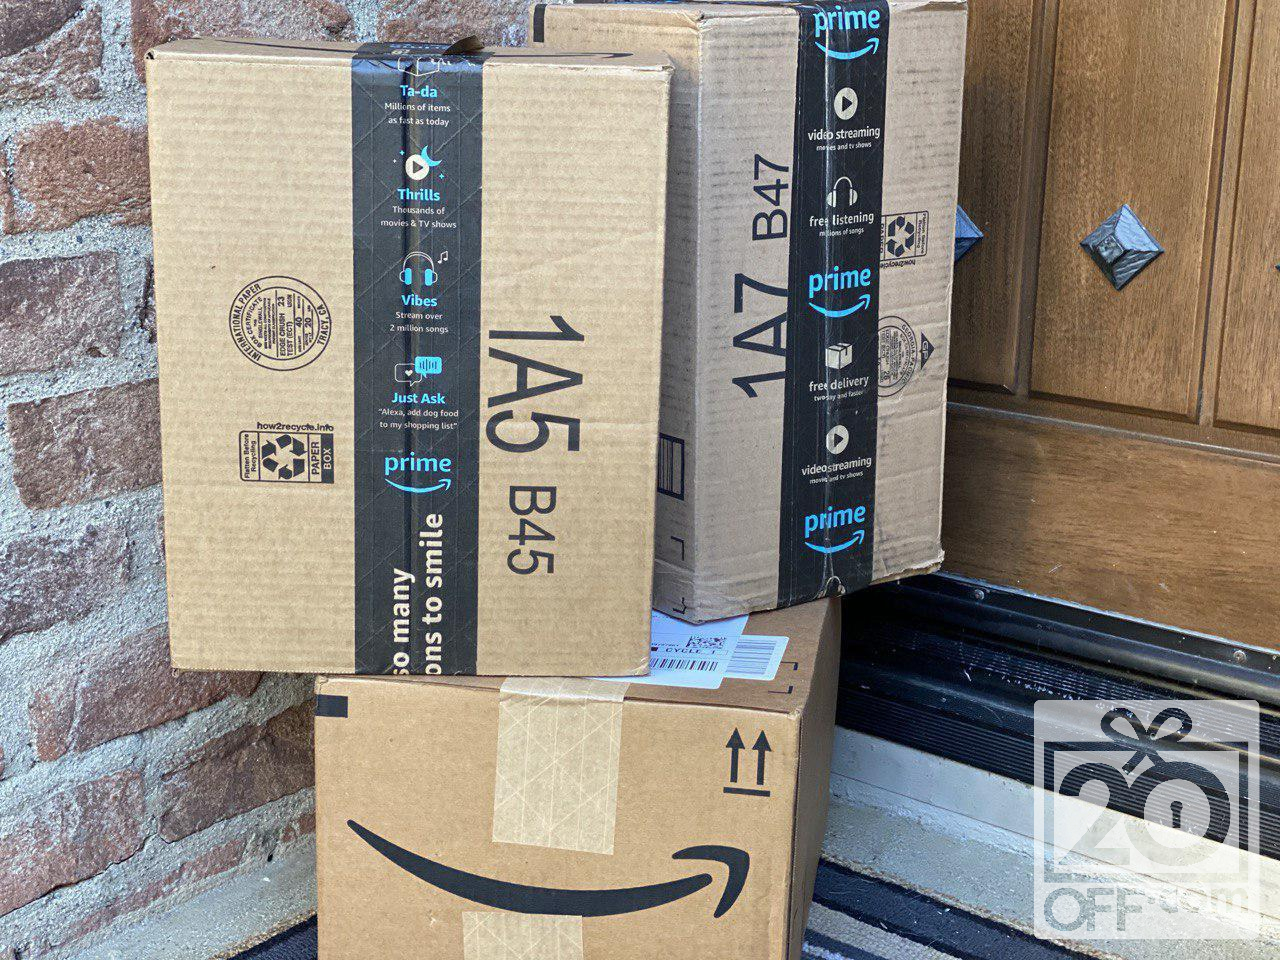 Amazon prime free delivery